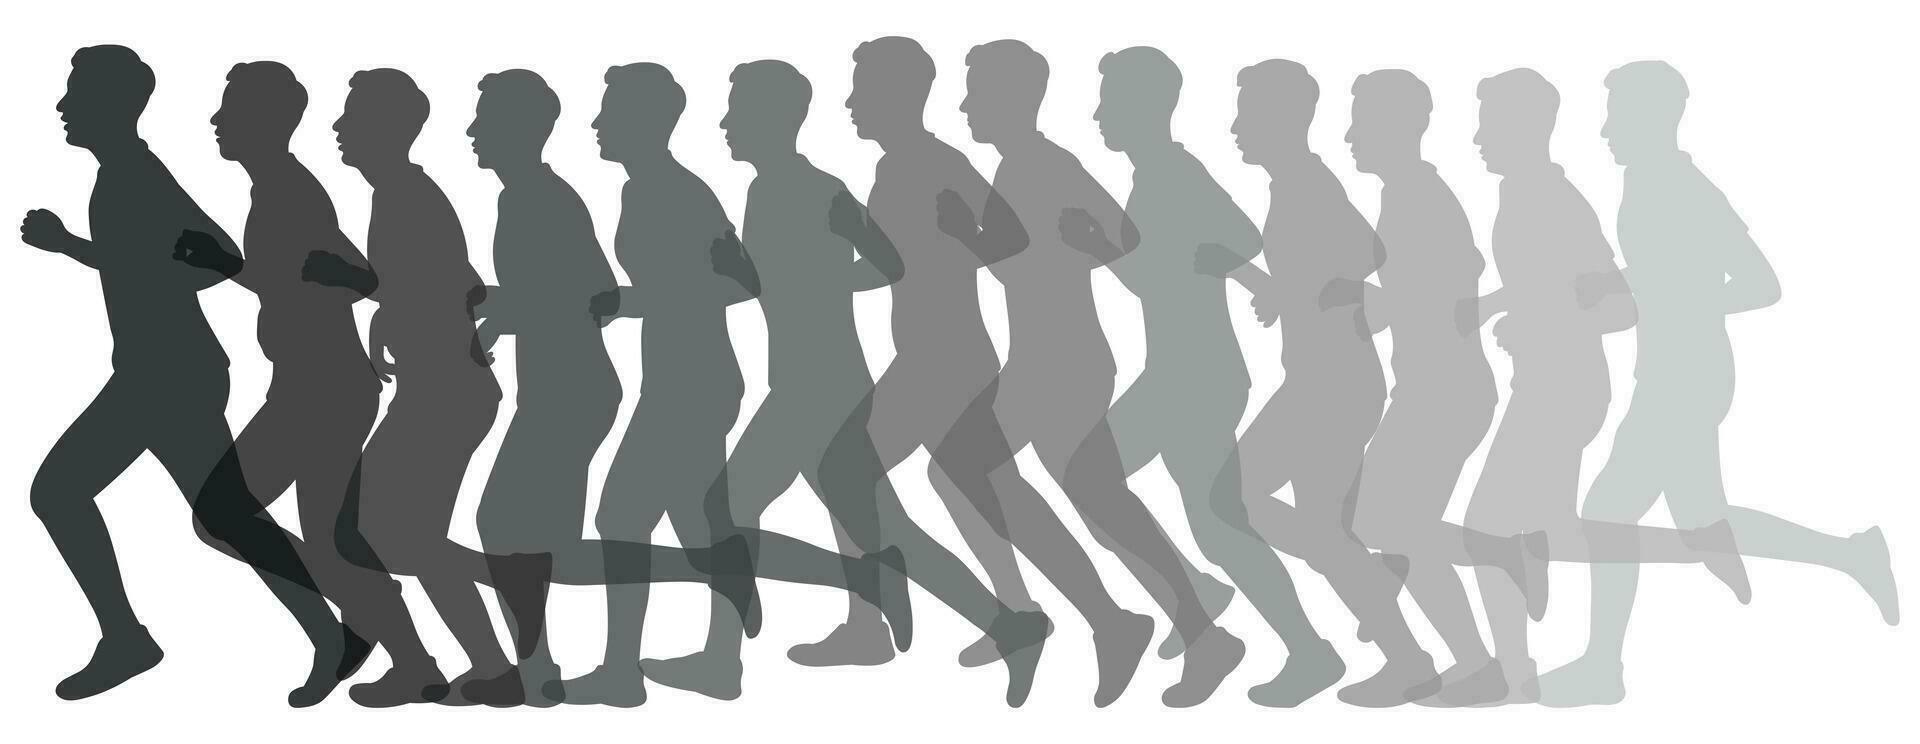 silueta de un Deportes equipo de Atletas corredores atletismo, correr, cruz, corriendo, correr, caminando vector